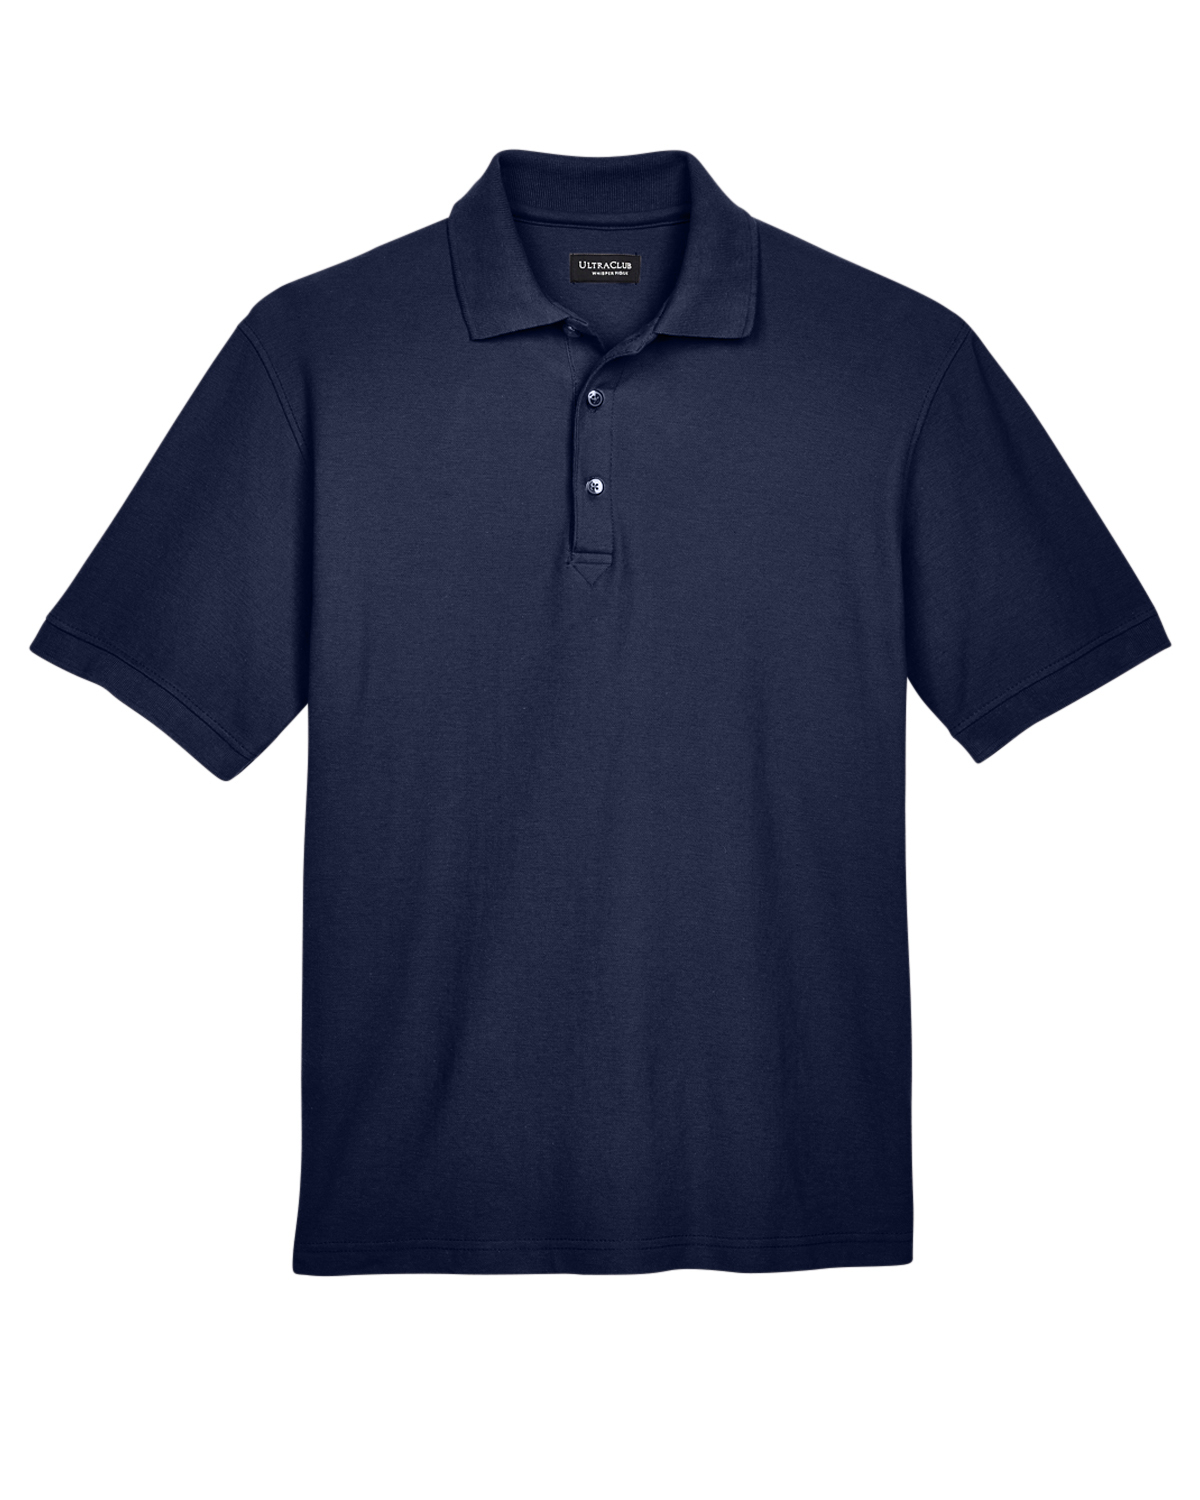 8540 UltraClub Men's Whisper Pique Polo $13.11 - Polo/Sport Shirts